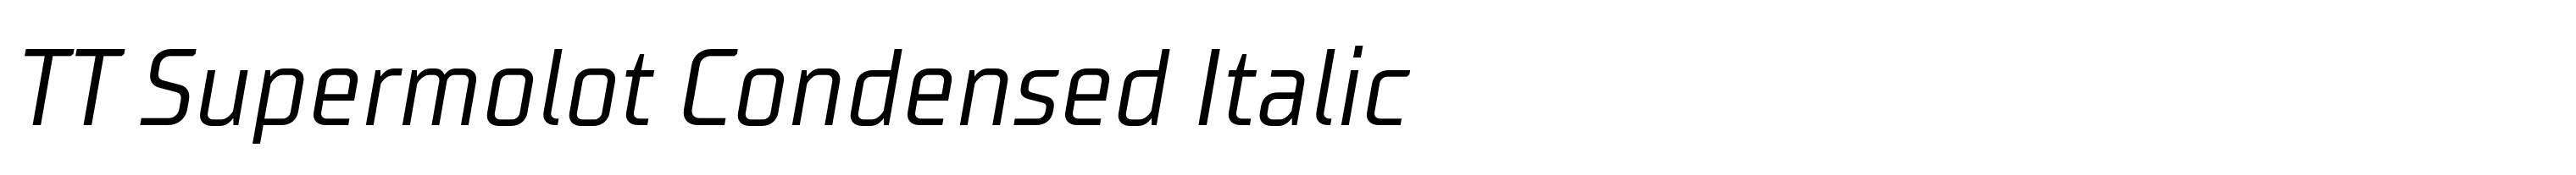 TT Supermolot Condensed Italic